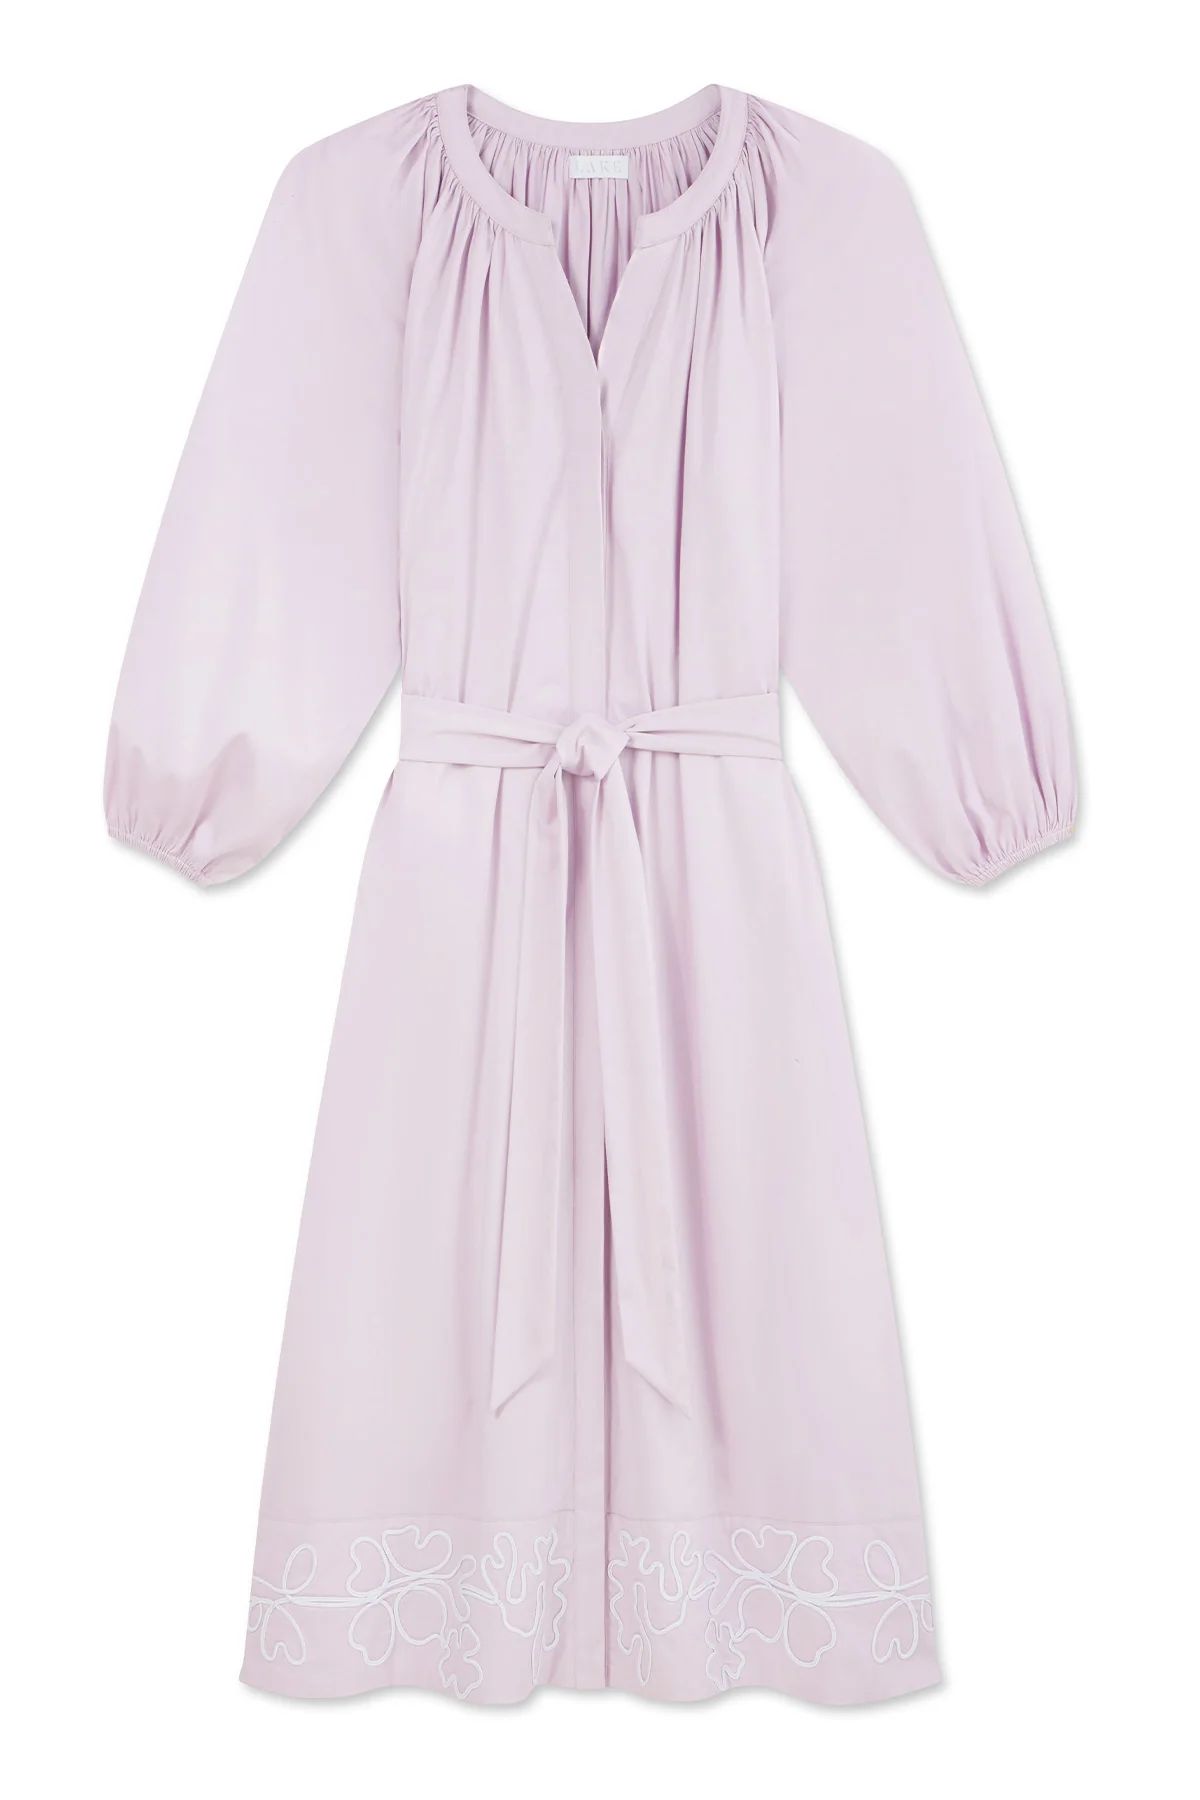 Brunch Dress in Wildflower | Lake Pajamas